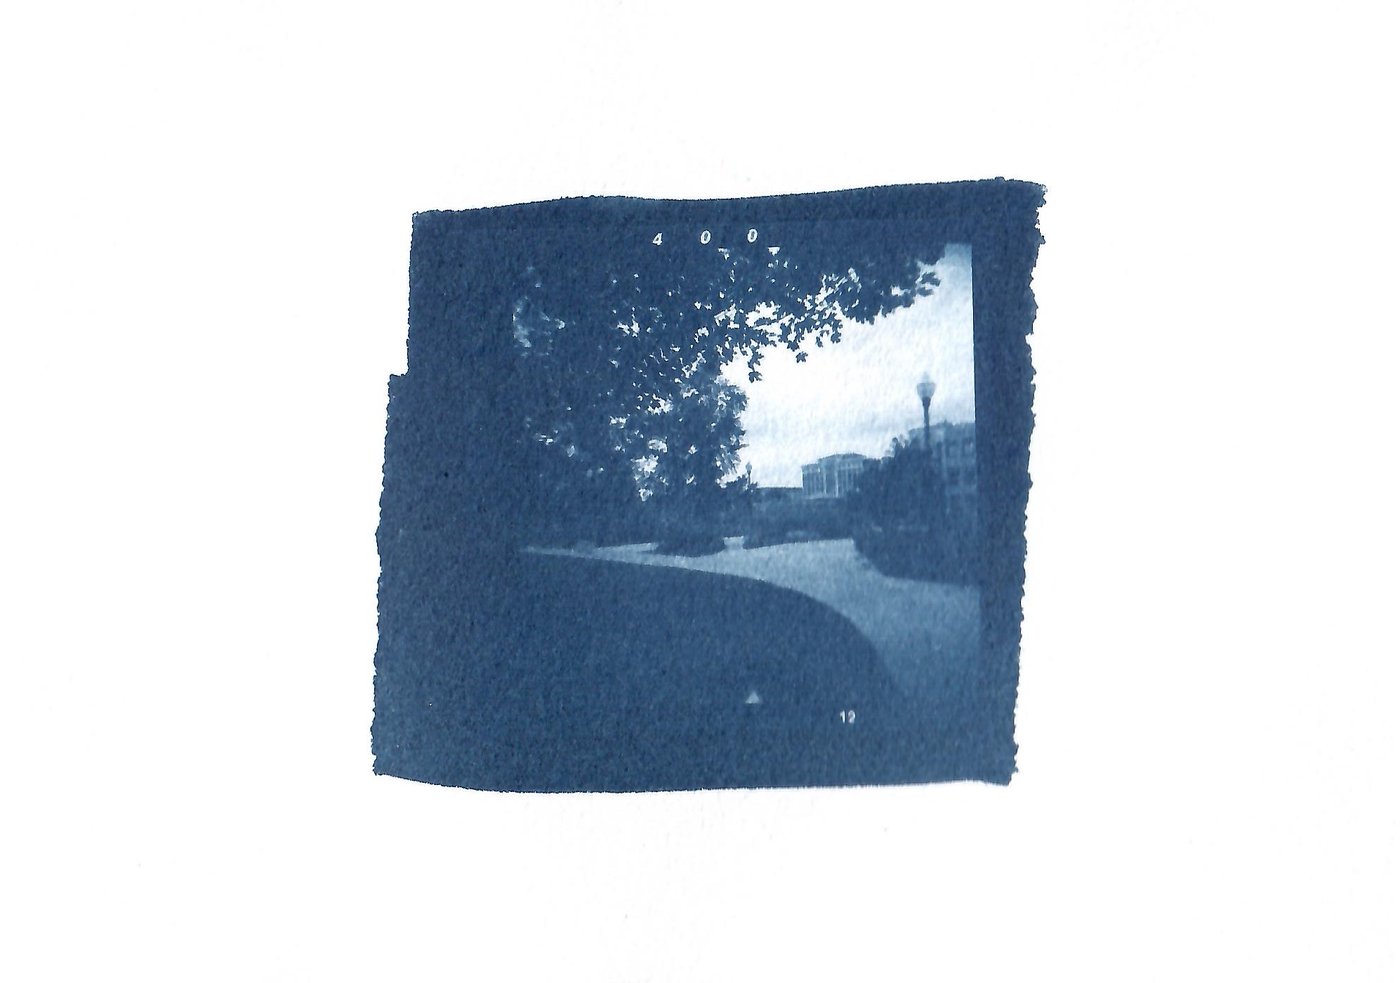  120 film cyanotype contact print . 